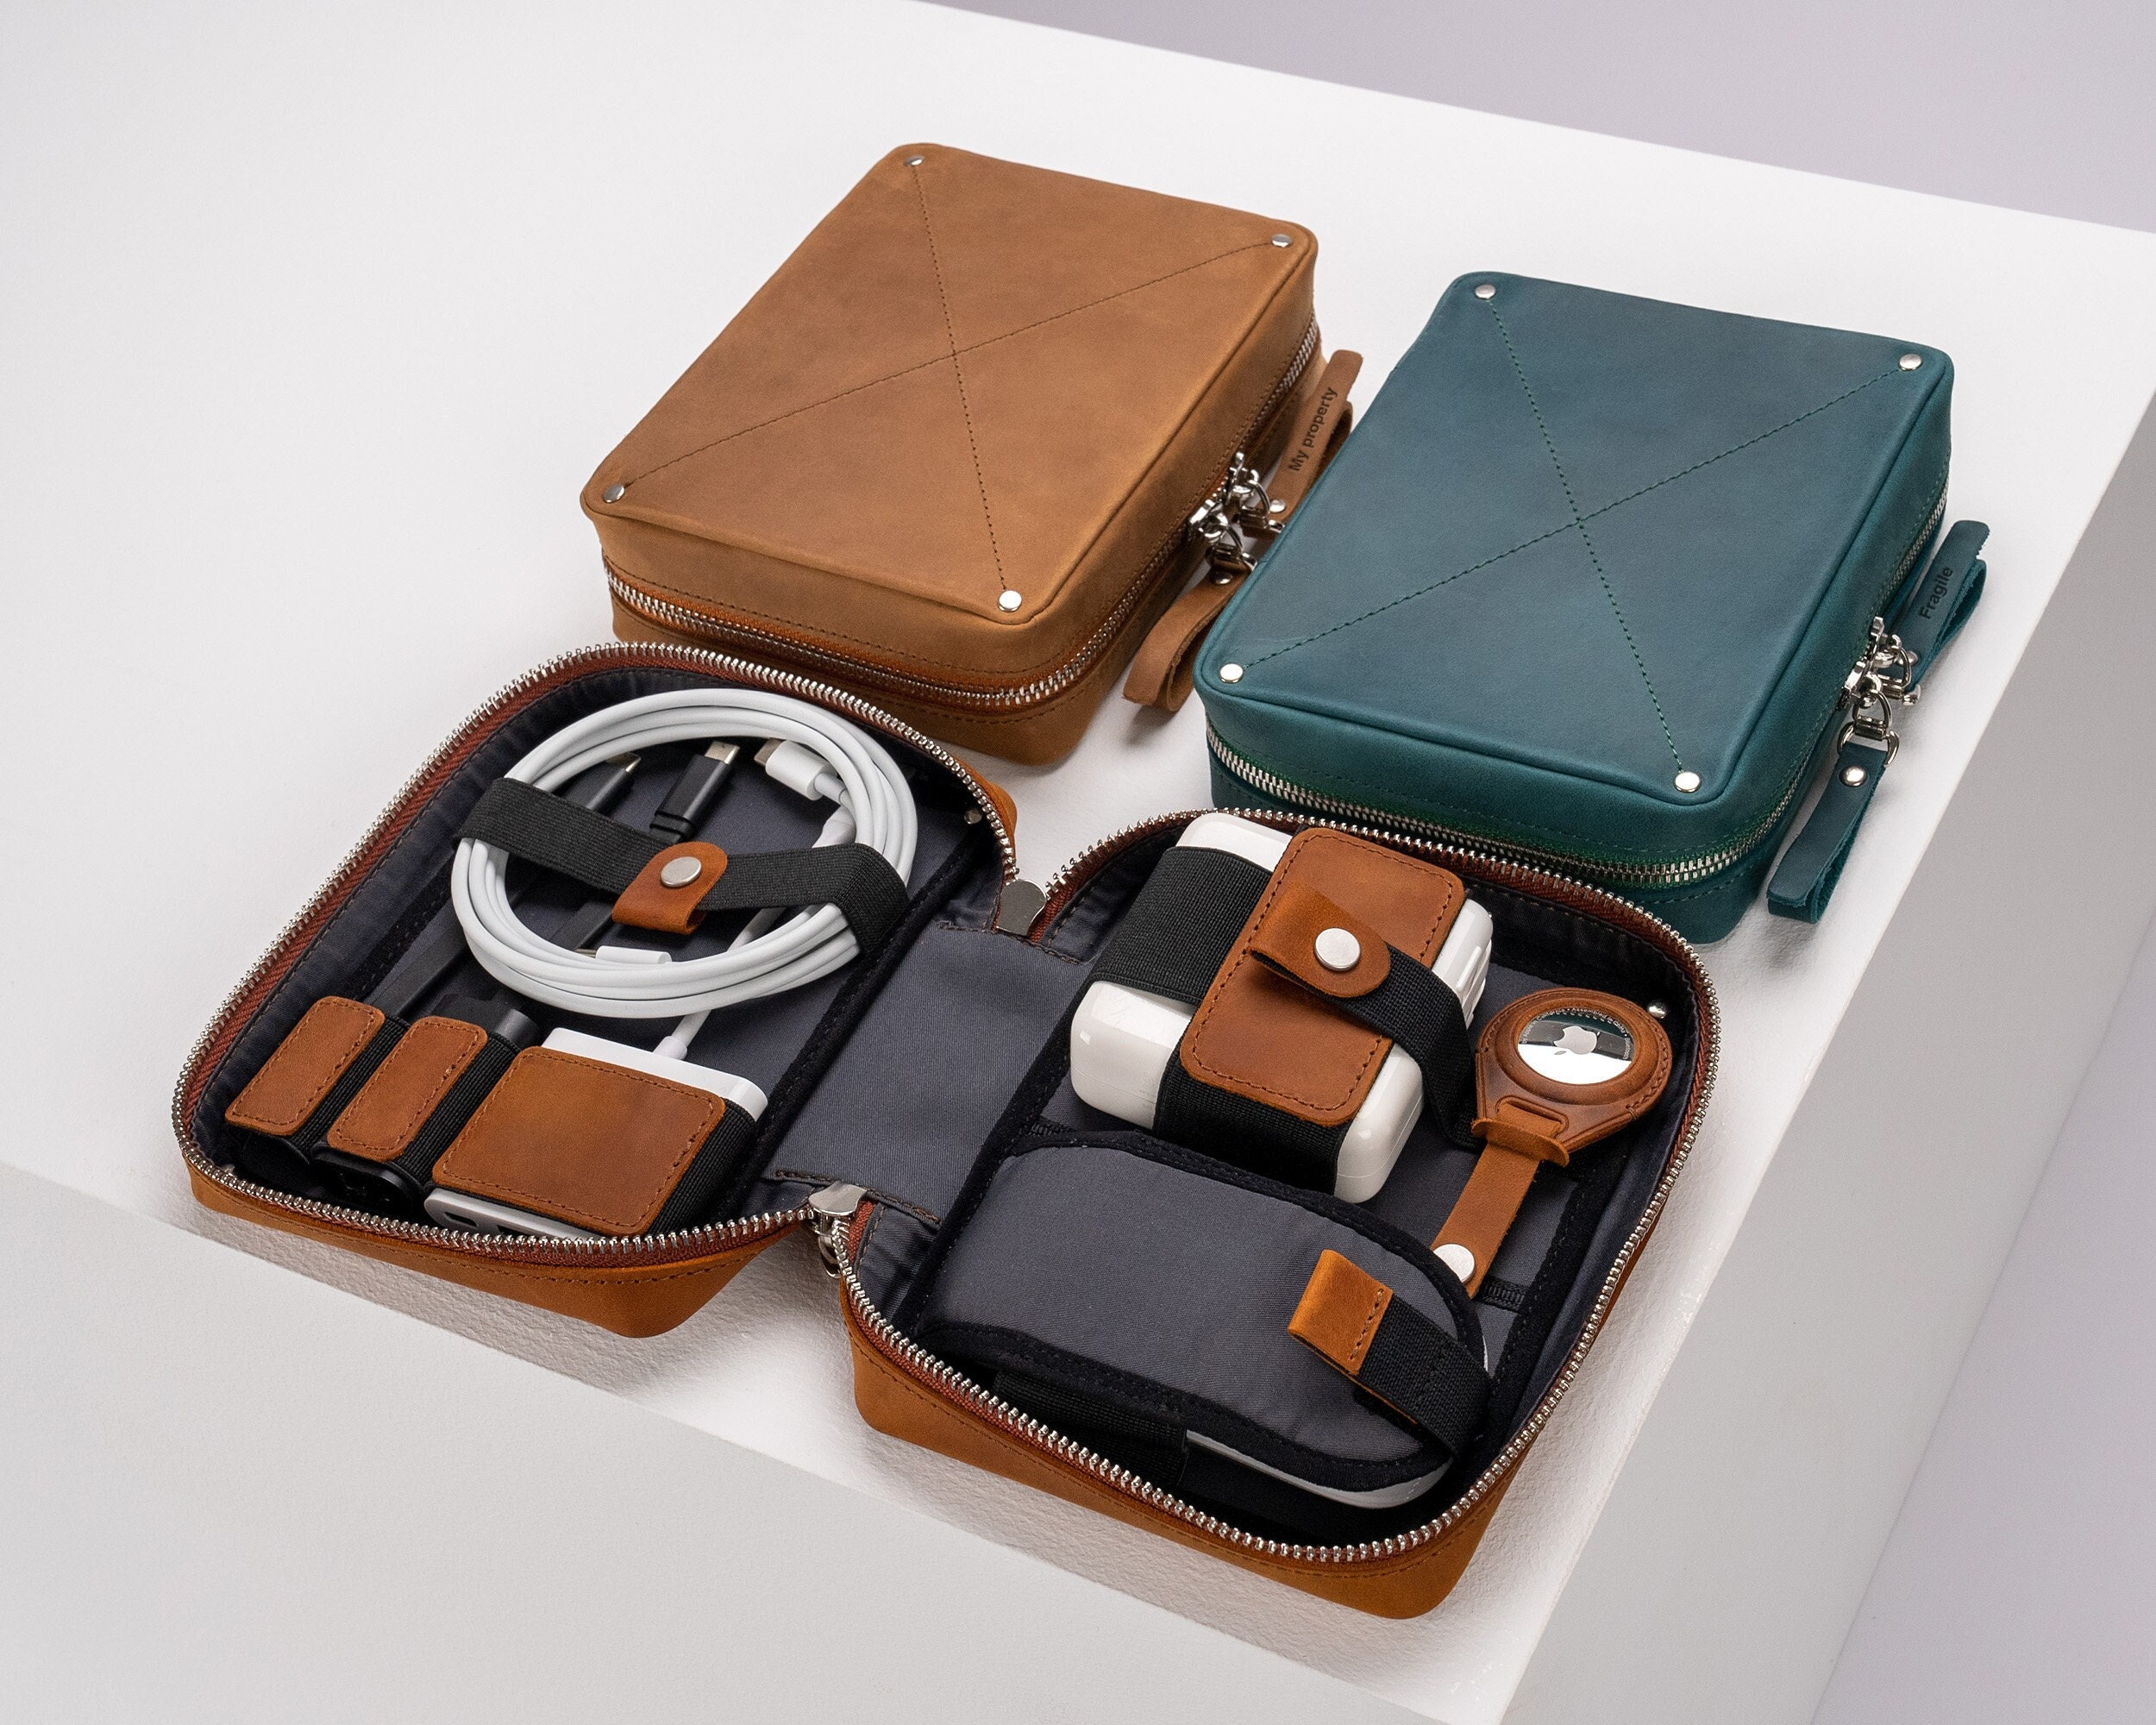 GCP Products Electronics Organizer Travel Case, Small Travel Cable Organizer  Bag For Travel Essentials, Travel Tech